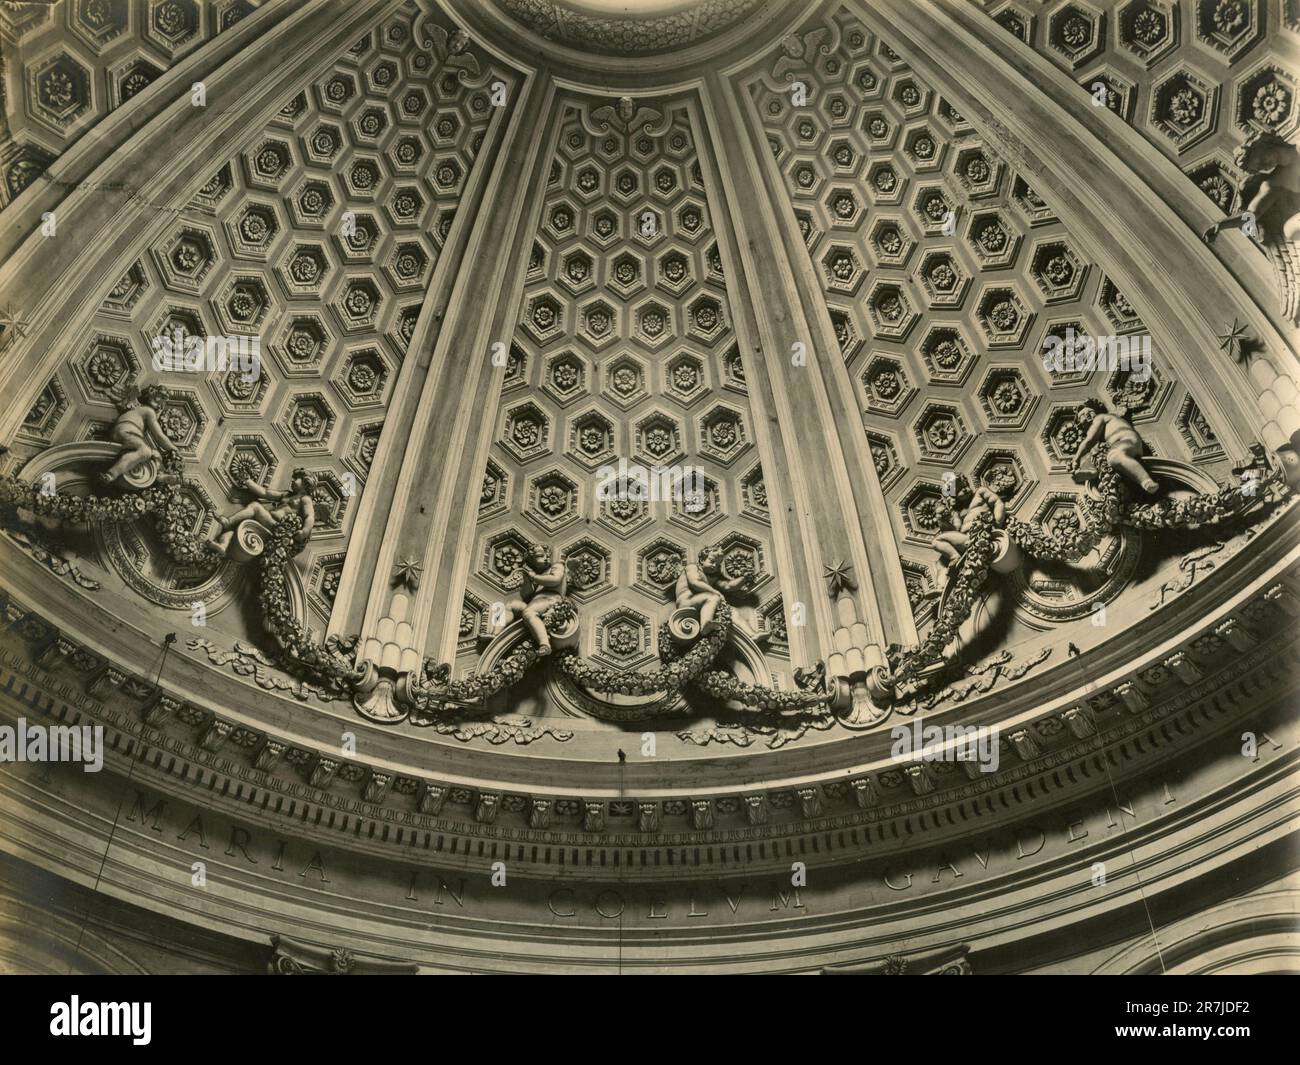 Stuccos on the dome of the Collegiata di Santa Maria Assunta, by Italian artist Gianlorenzo Bernini, Ariccia, Italy 1900s Stock Photo